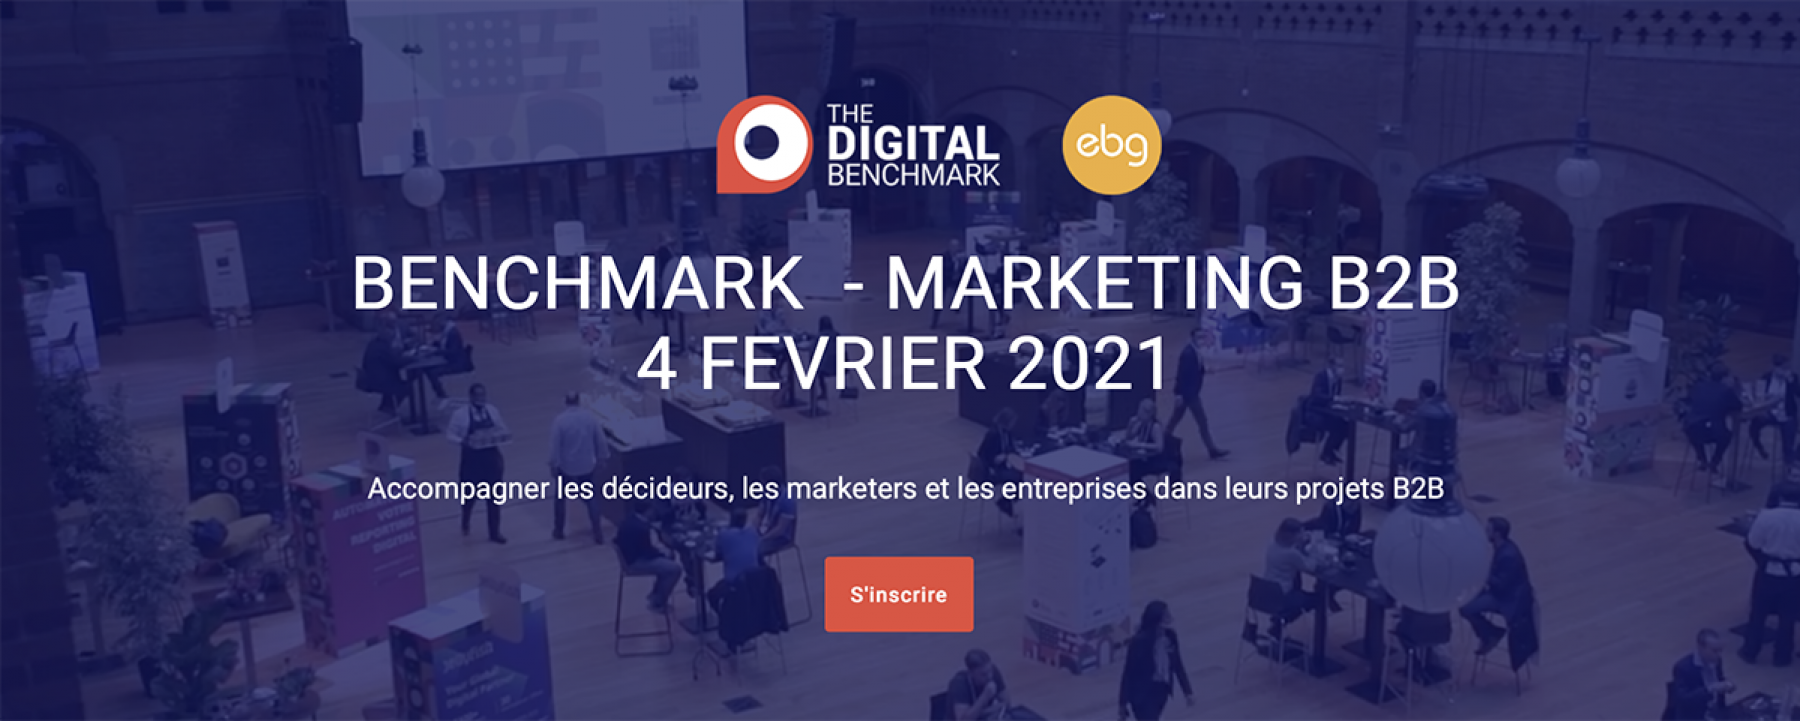 The Digital Benchmark - Marketing B2B, un événement EBG organisé le 4 février 2021